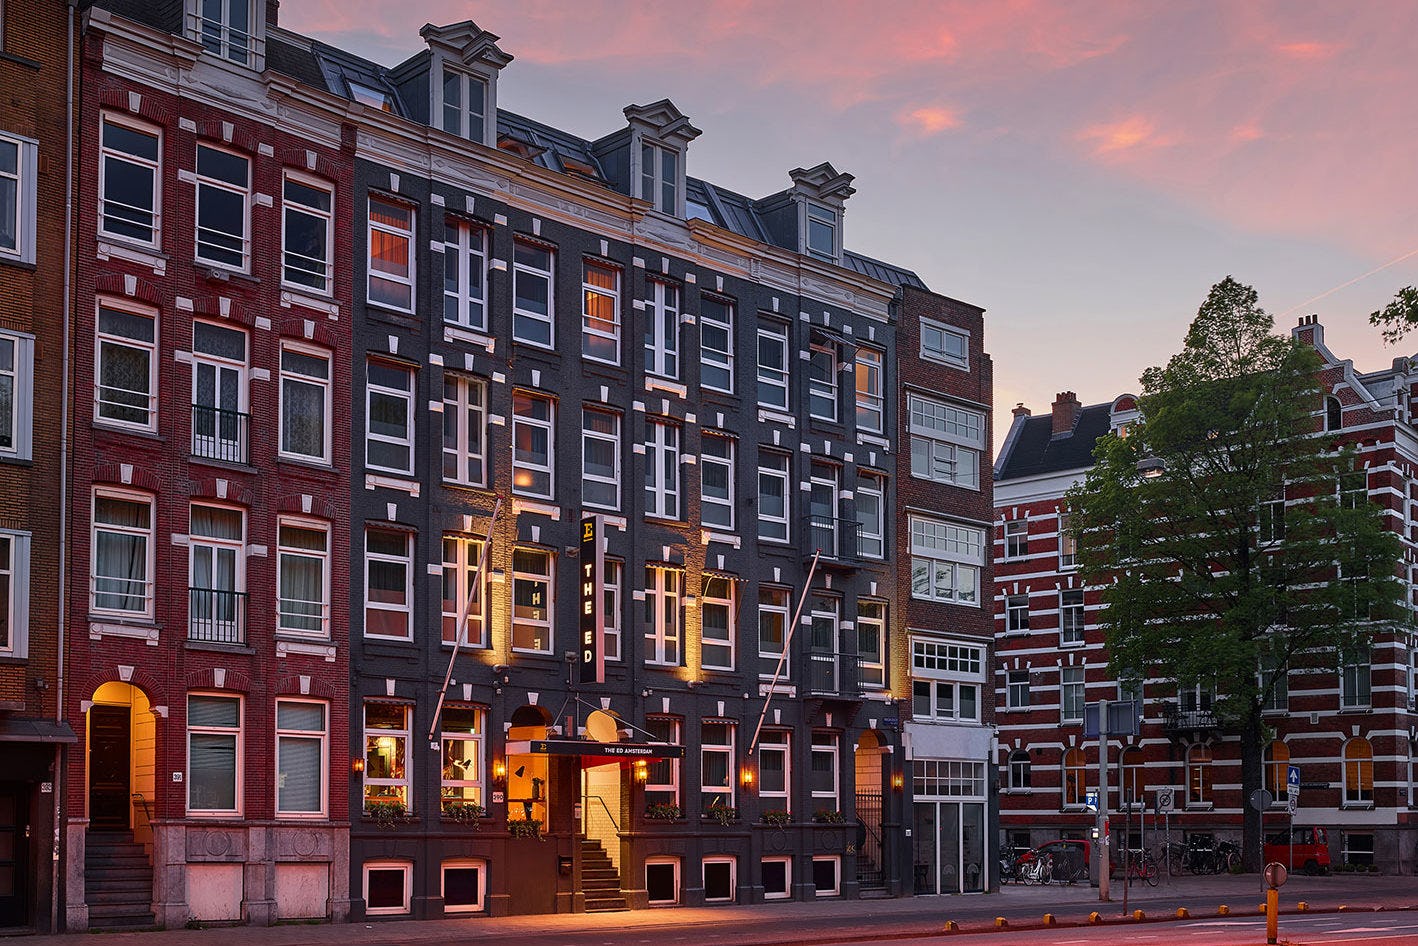 Amsterdamse hoteliers woest om beperking op hotelbezetting